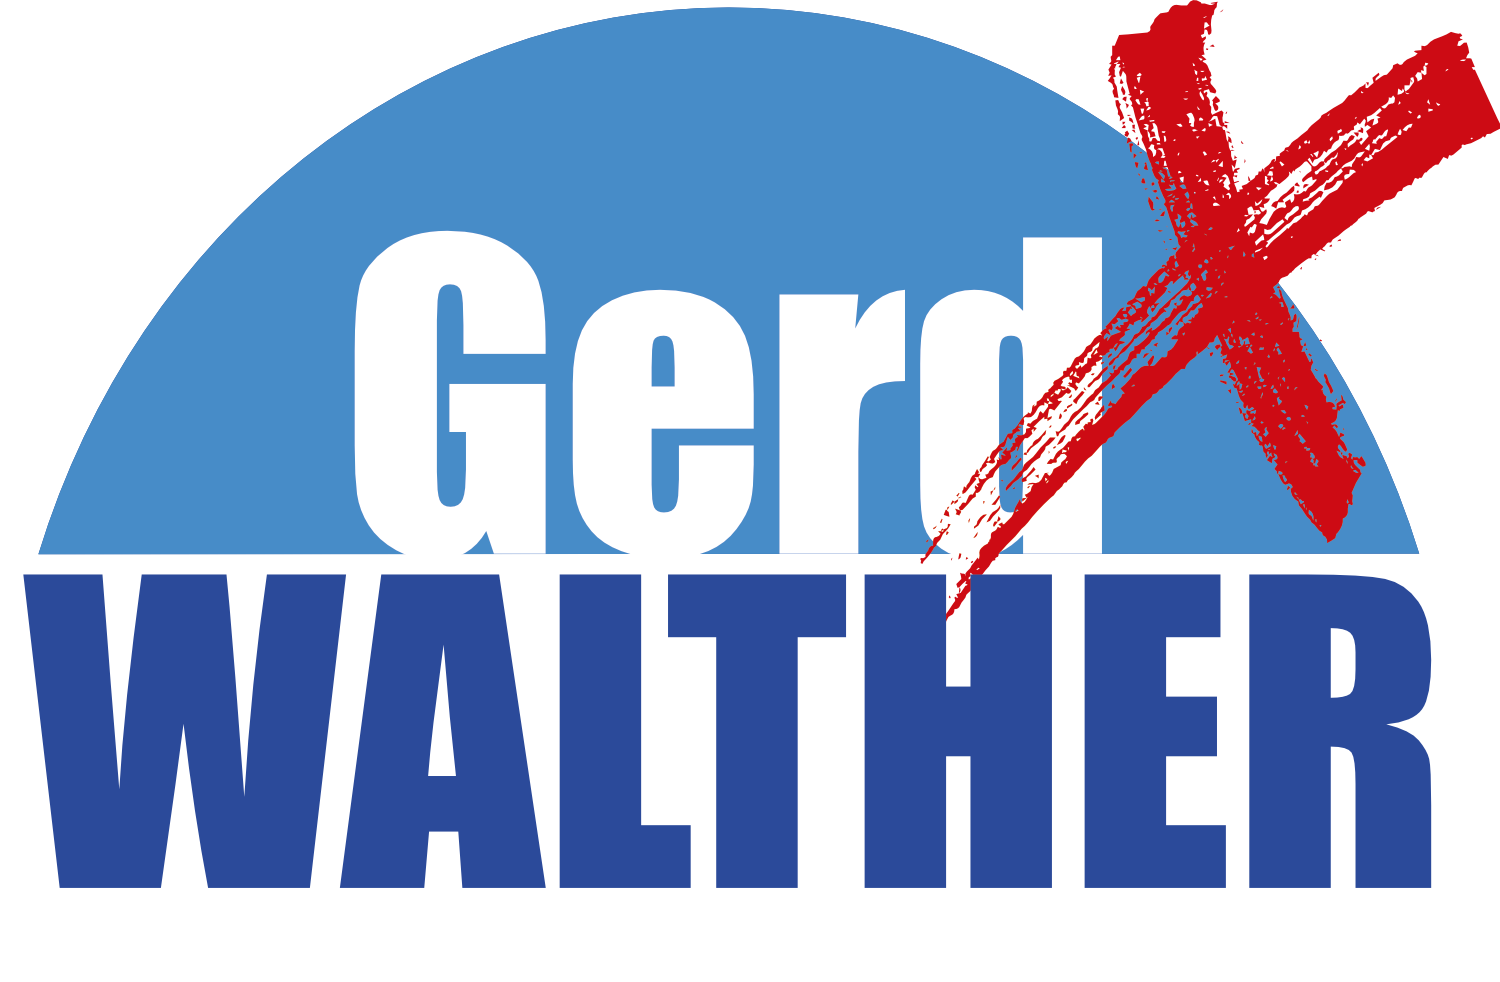 Gerd Walther